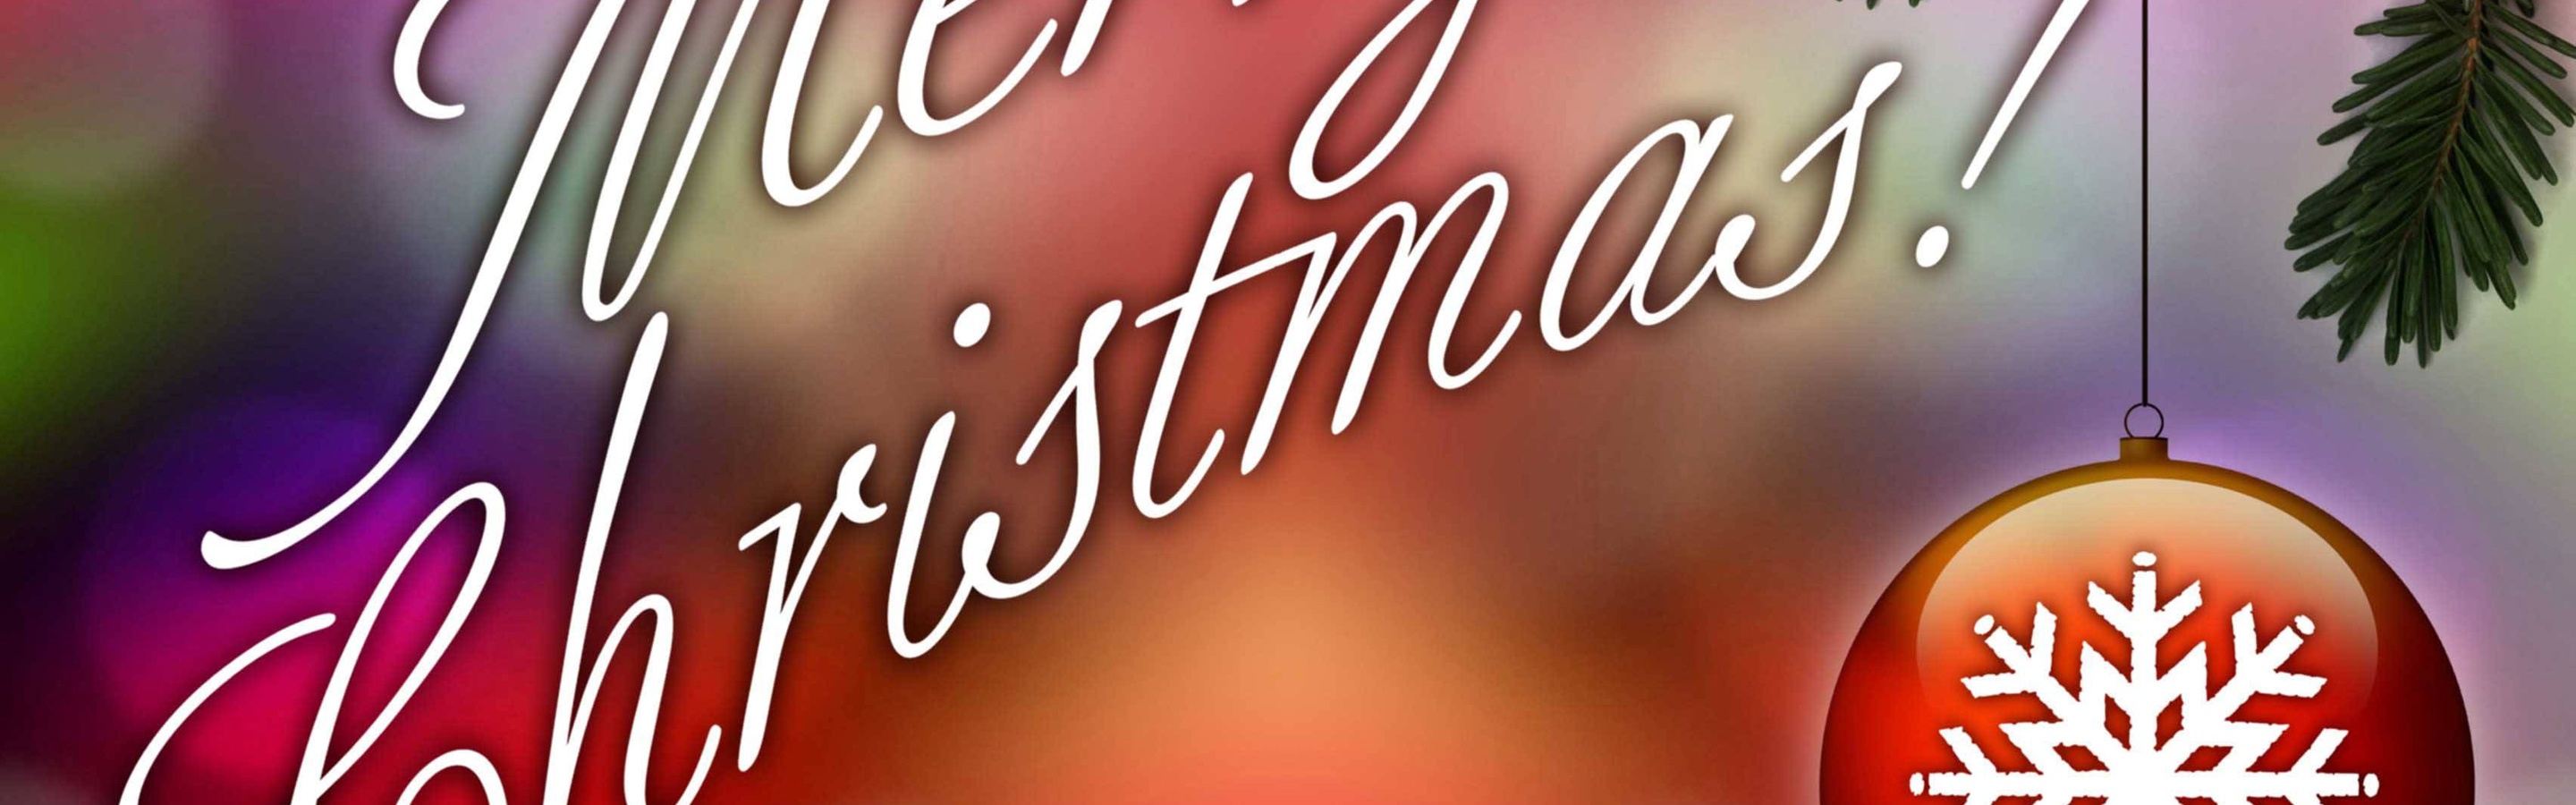 Merry Merry Christmas